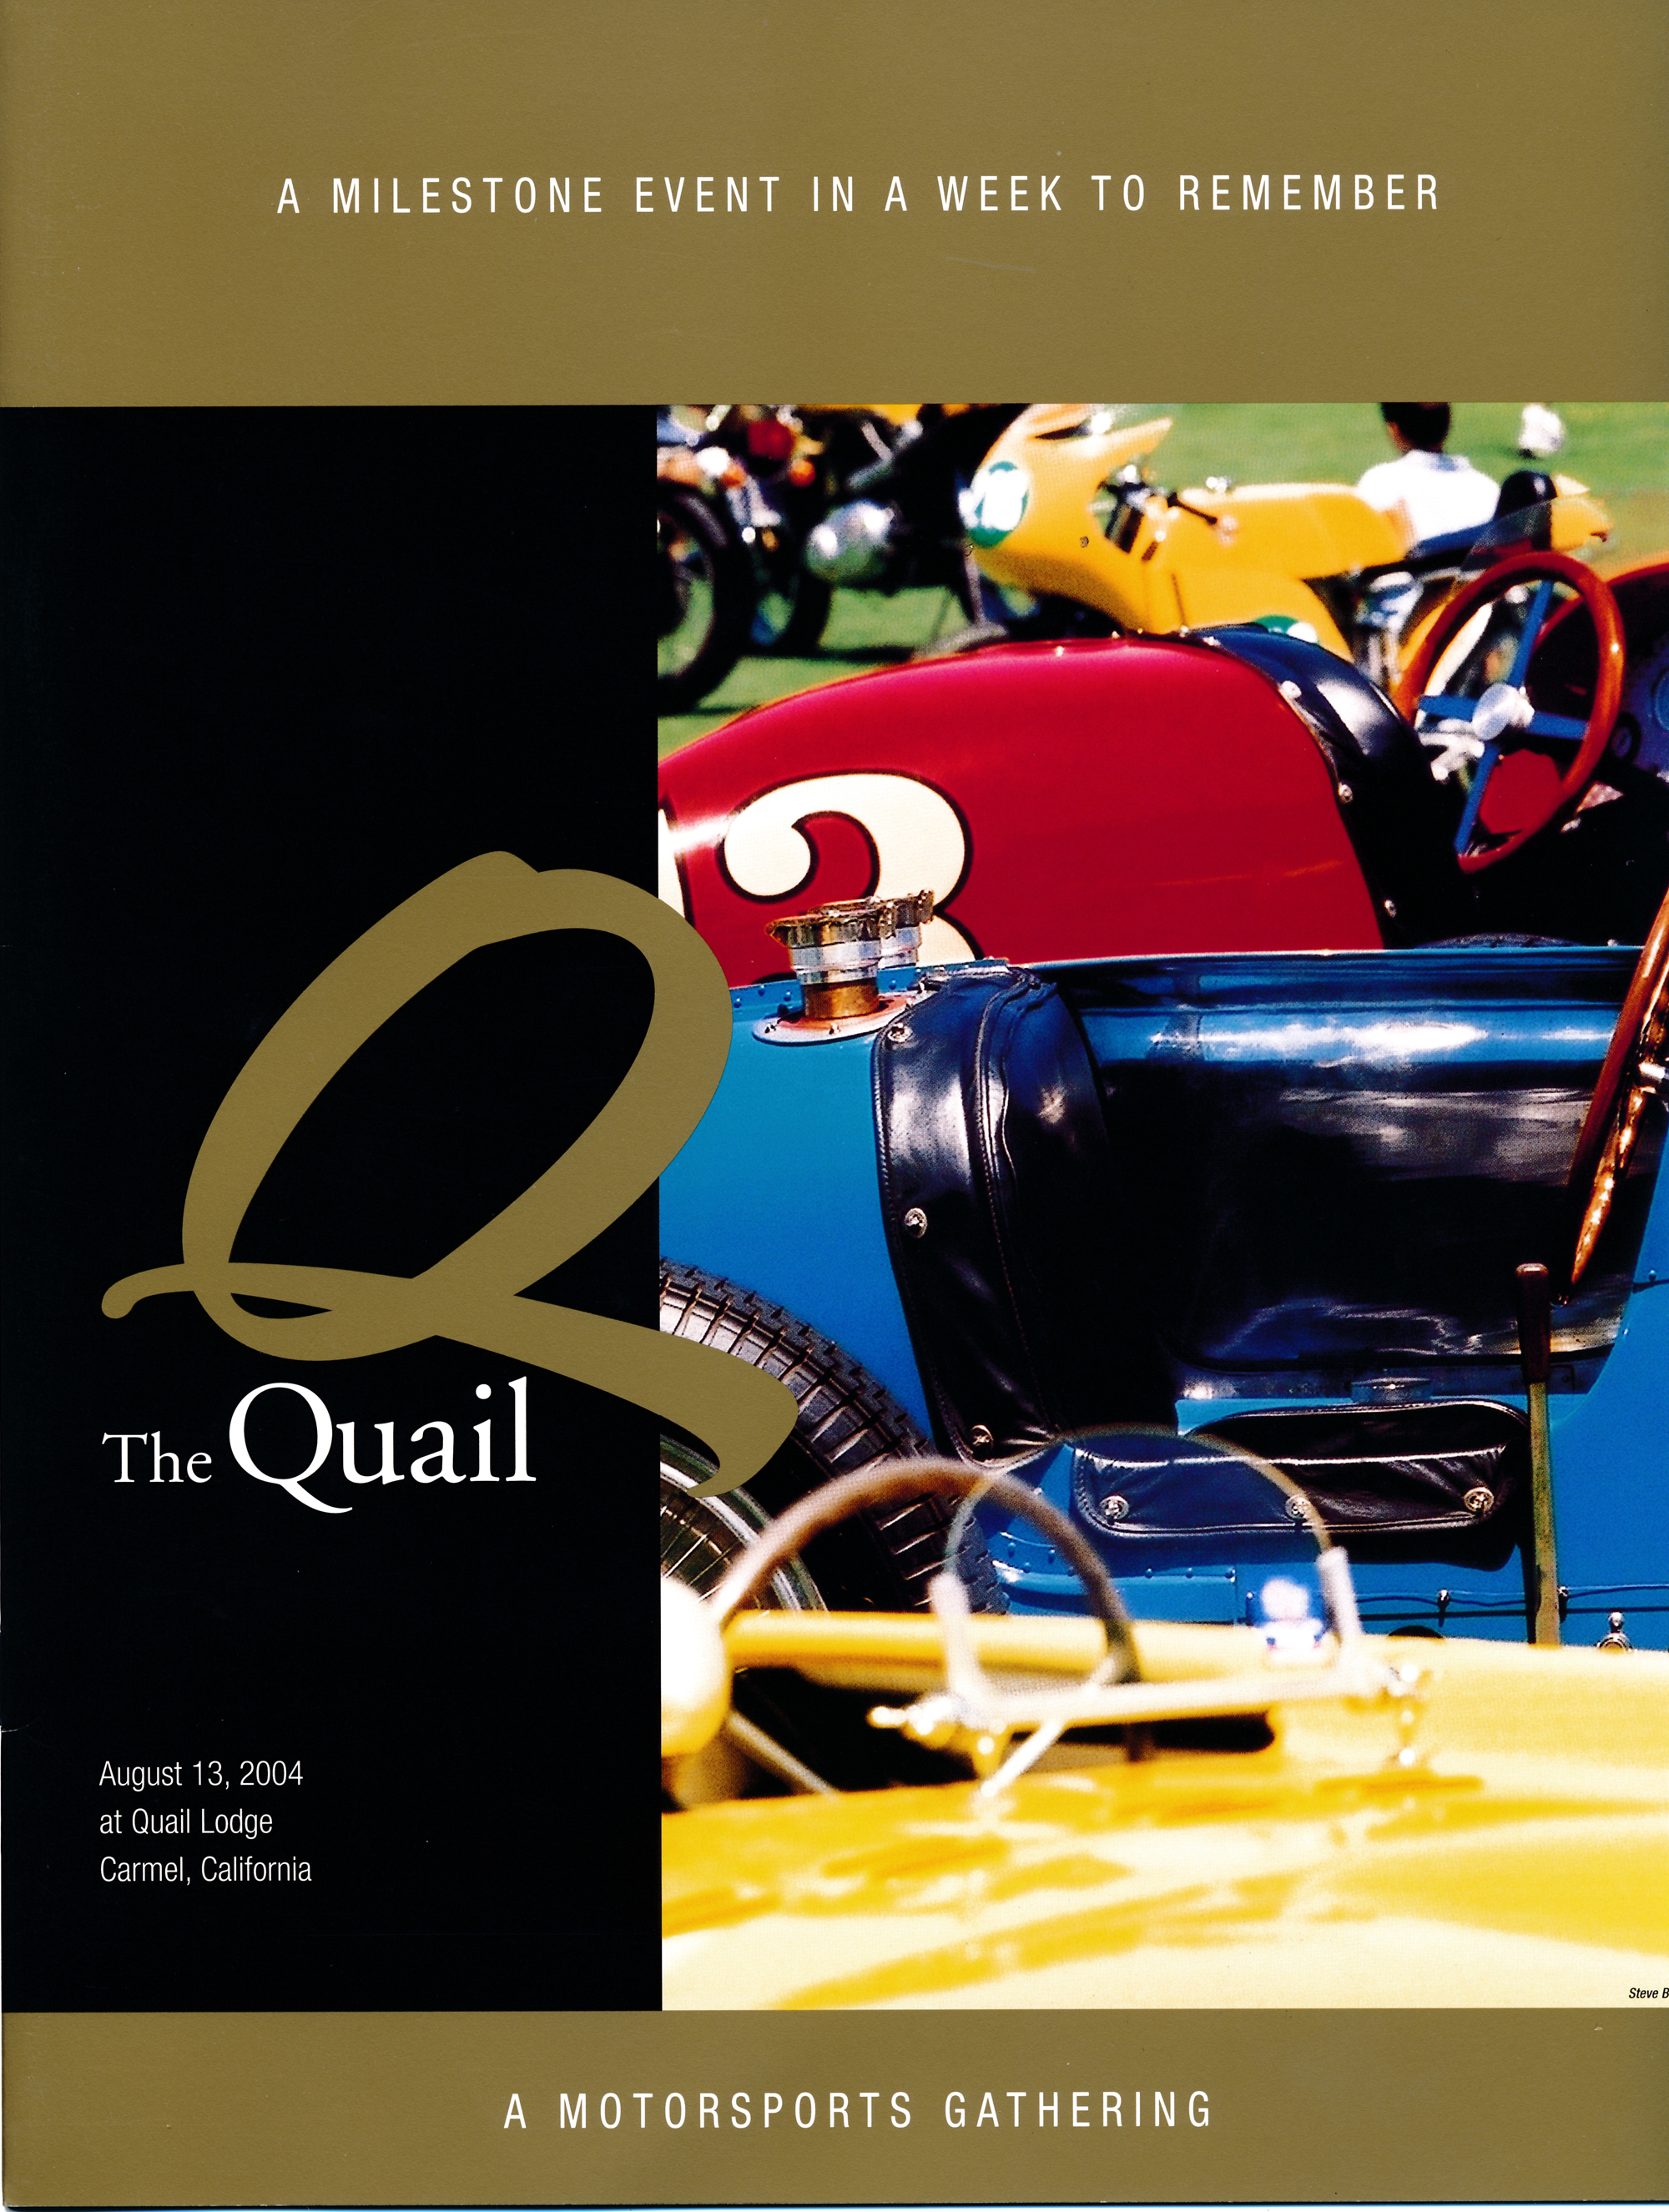  The Quail Motorsports Gathering